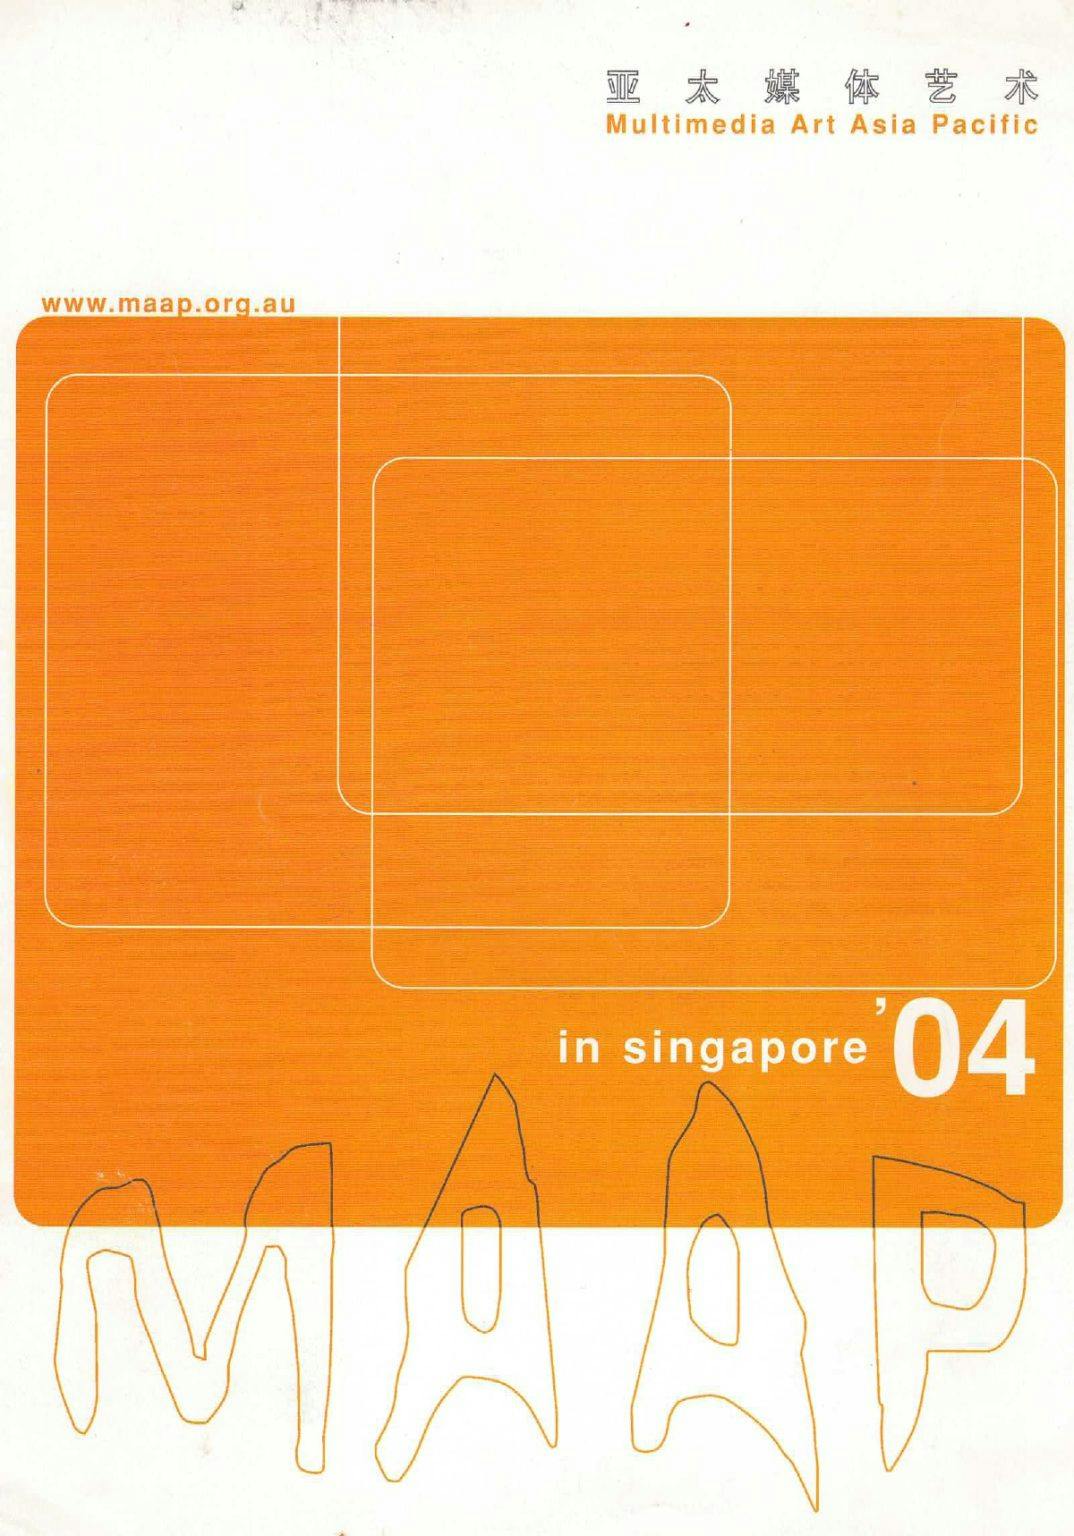 Multimedia Art Asia Pacific in singapore’04 – Leaflet 亞太媒體藝術 04 – 單張